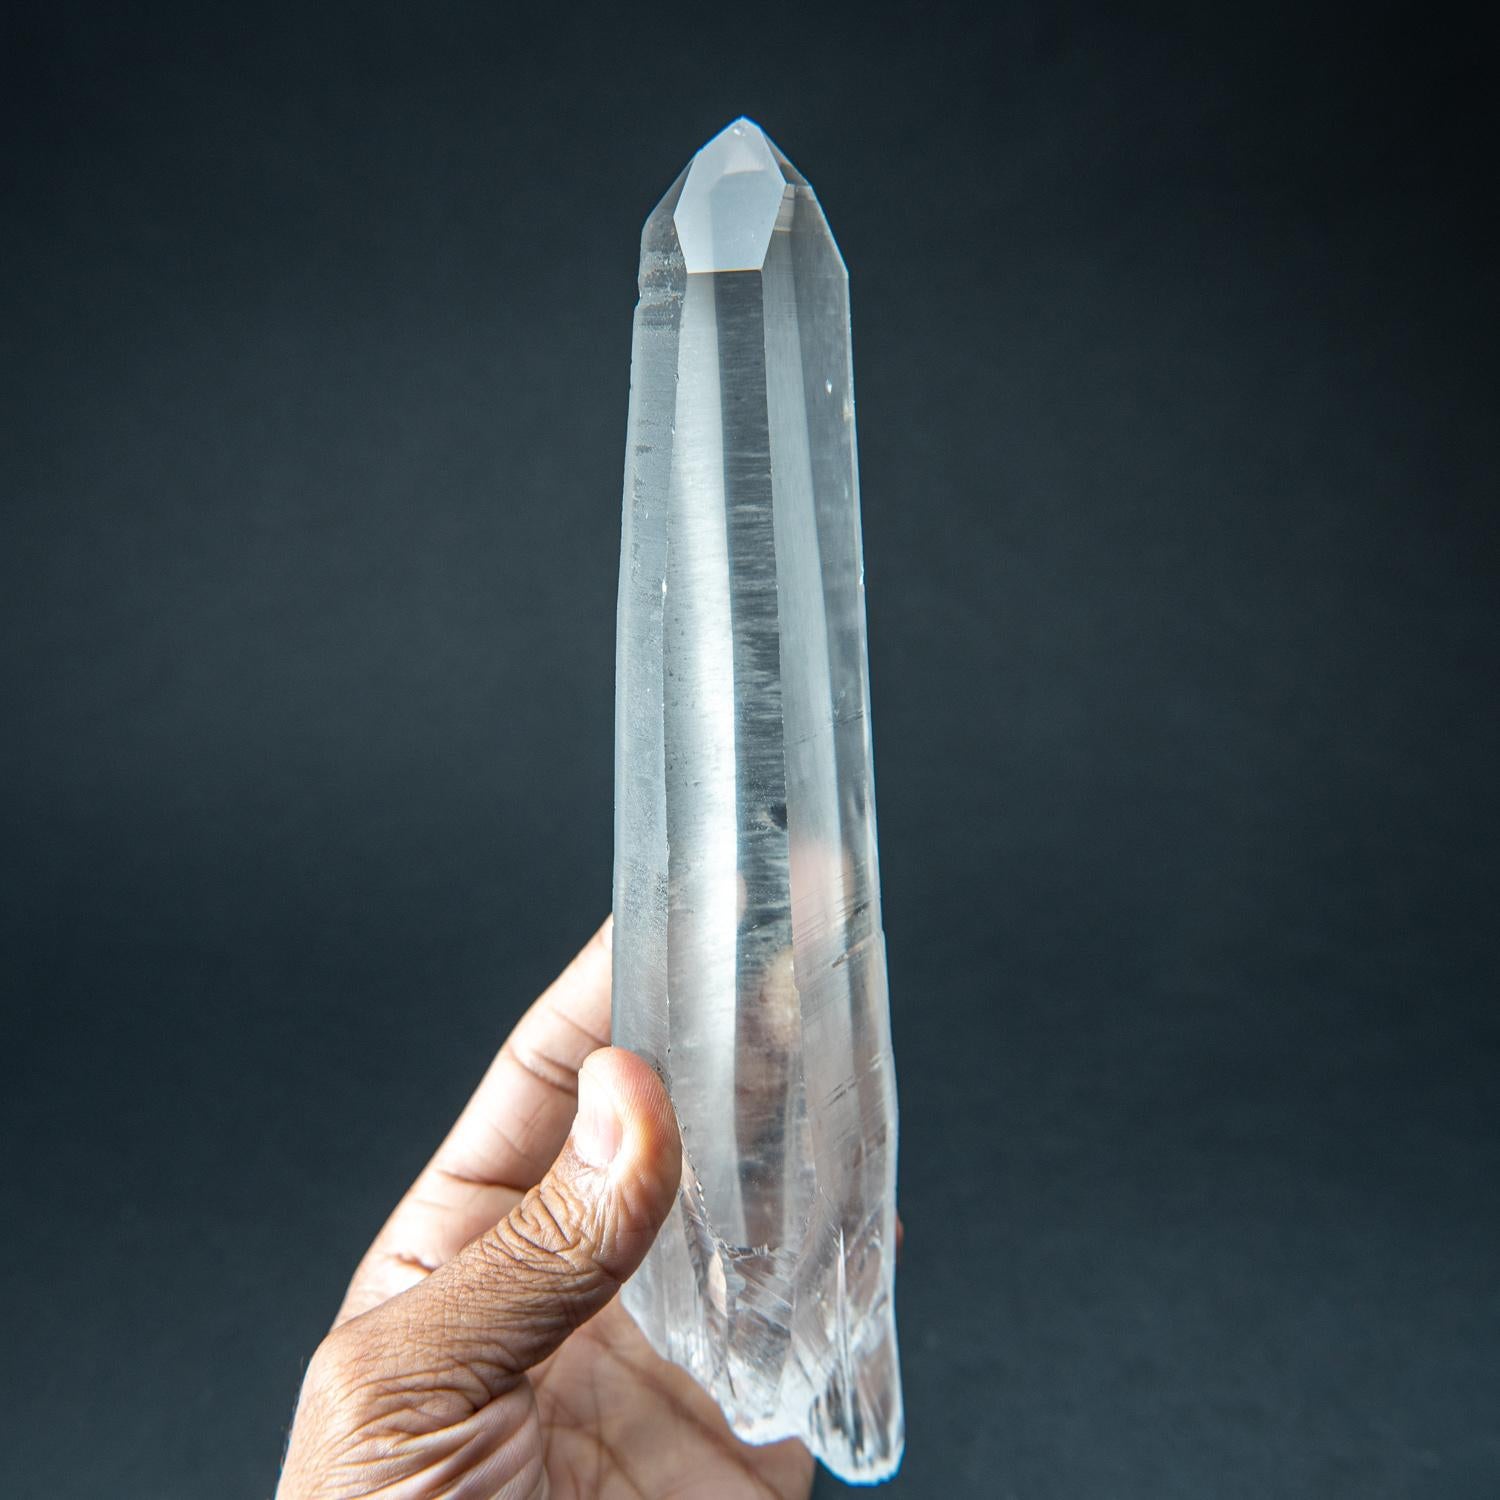 Brazilian Natural Lemurian Quartz Crystal from Brazil (1.65 lbs) For Sale